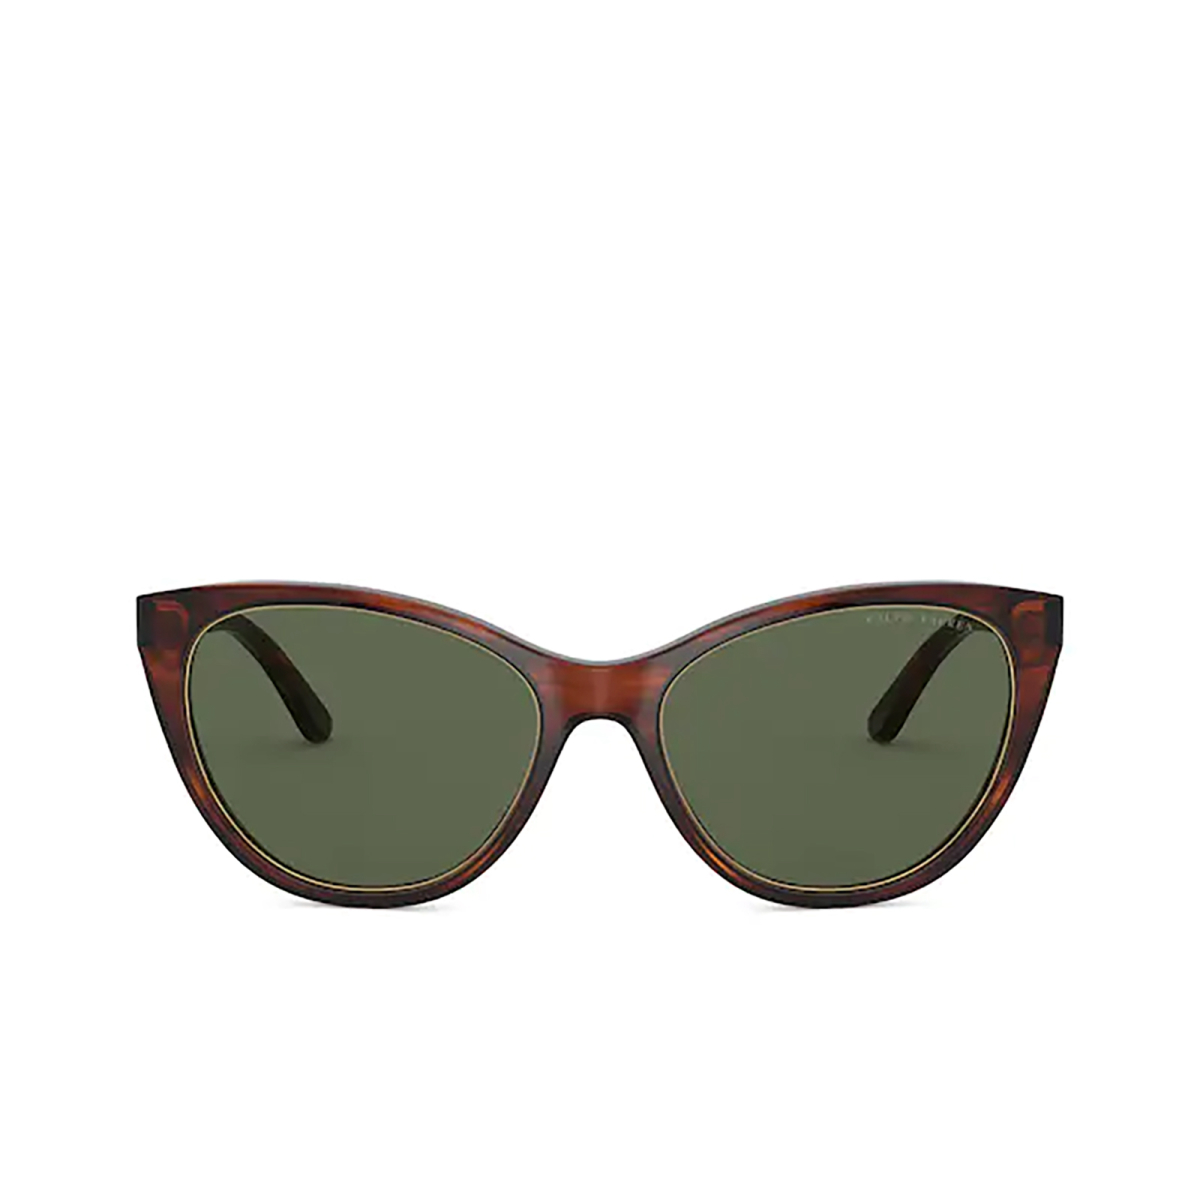 Ralph Lauren RL8186 Sunglasses 500771 SHINY STRIPED HAVANA - front view